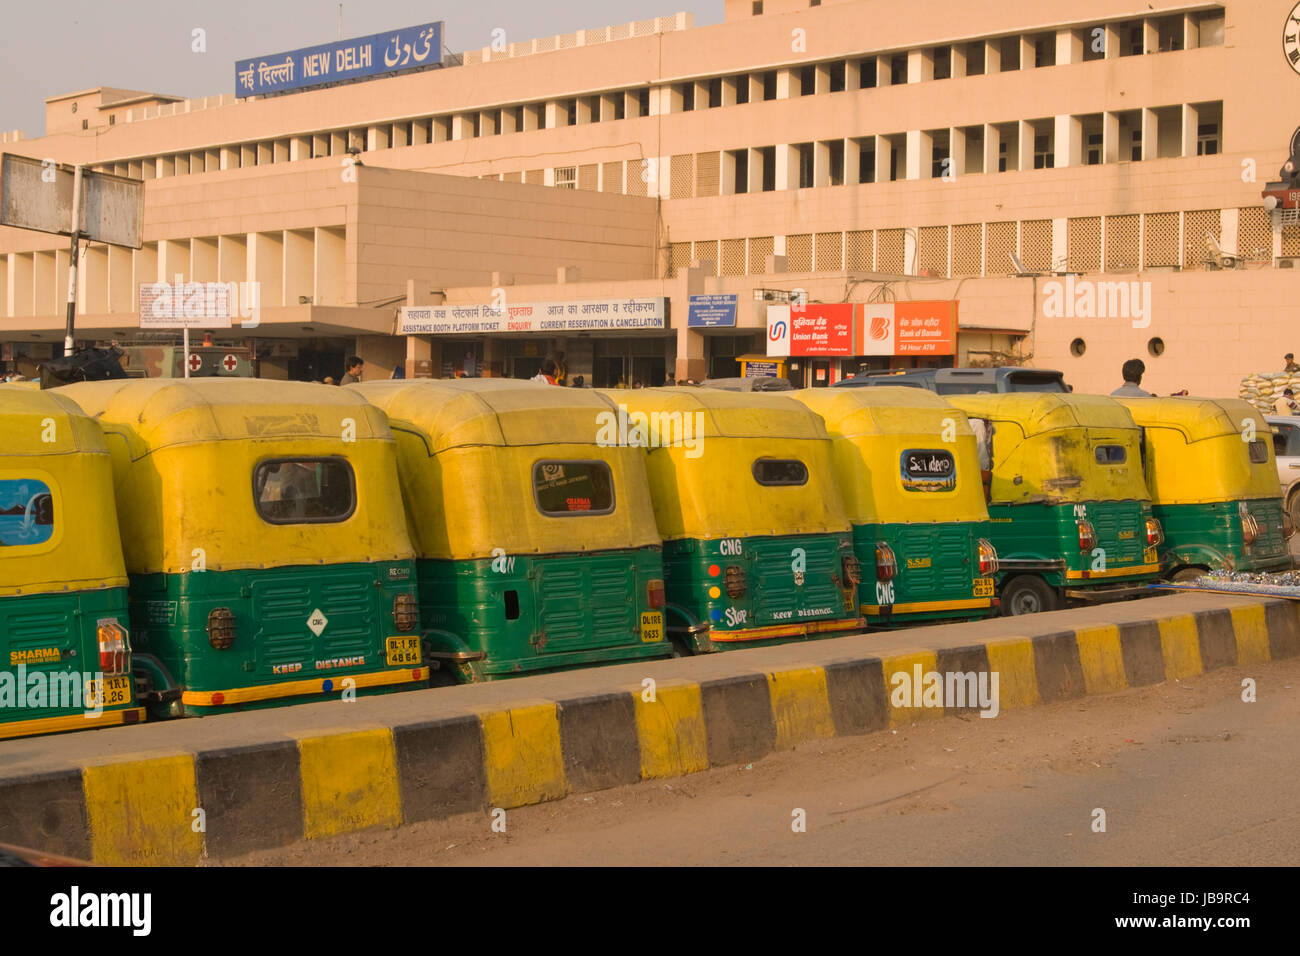 Row of yellow auto rickshaws outside New Delhi railway station in Delhi, India. Stock Photo